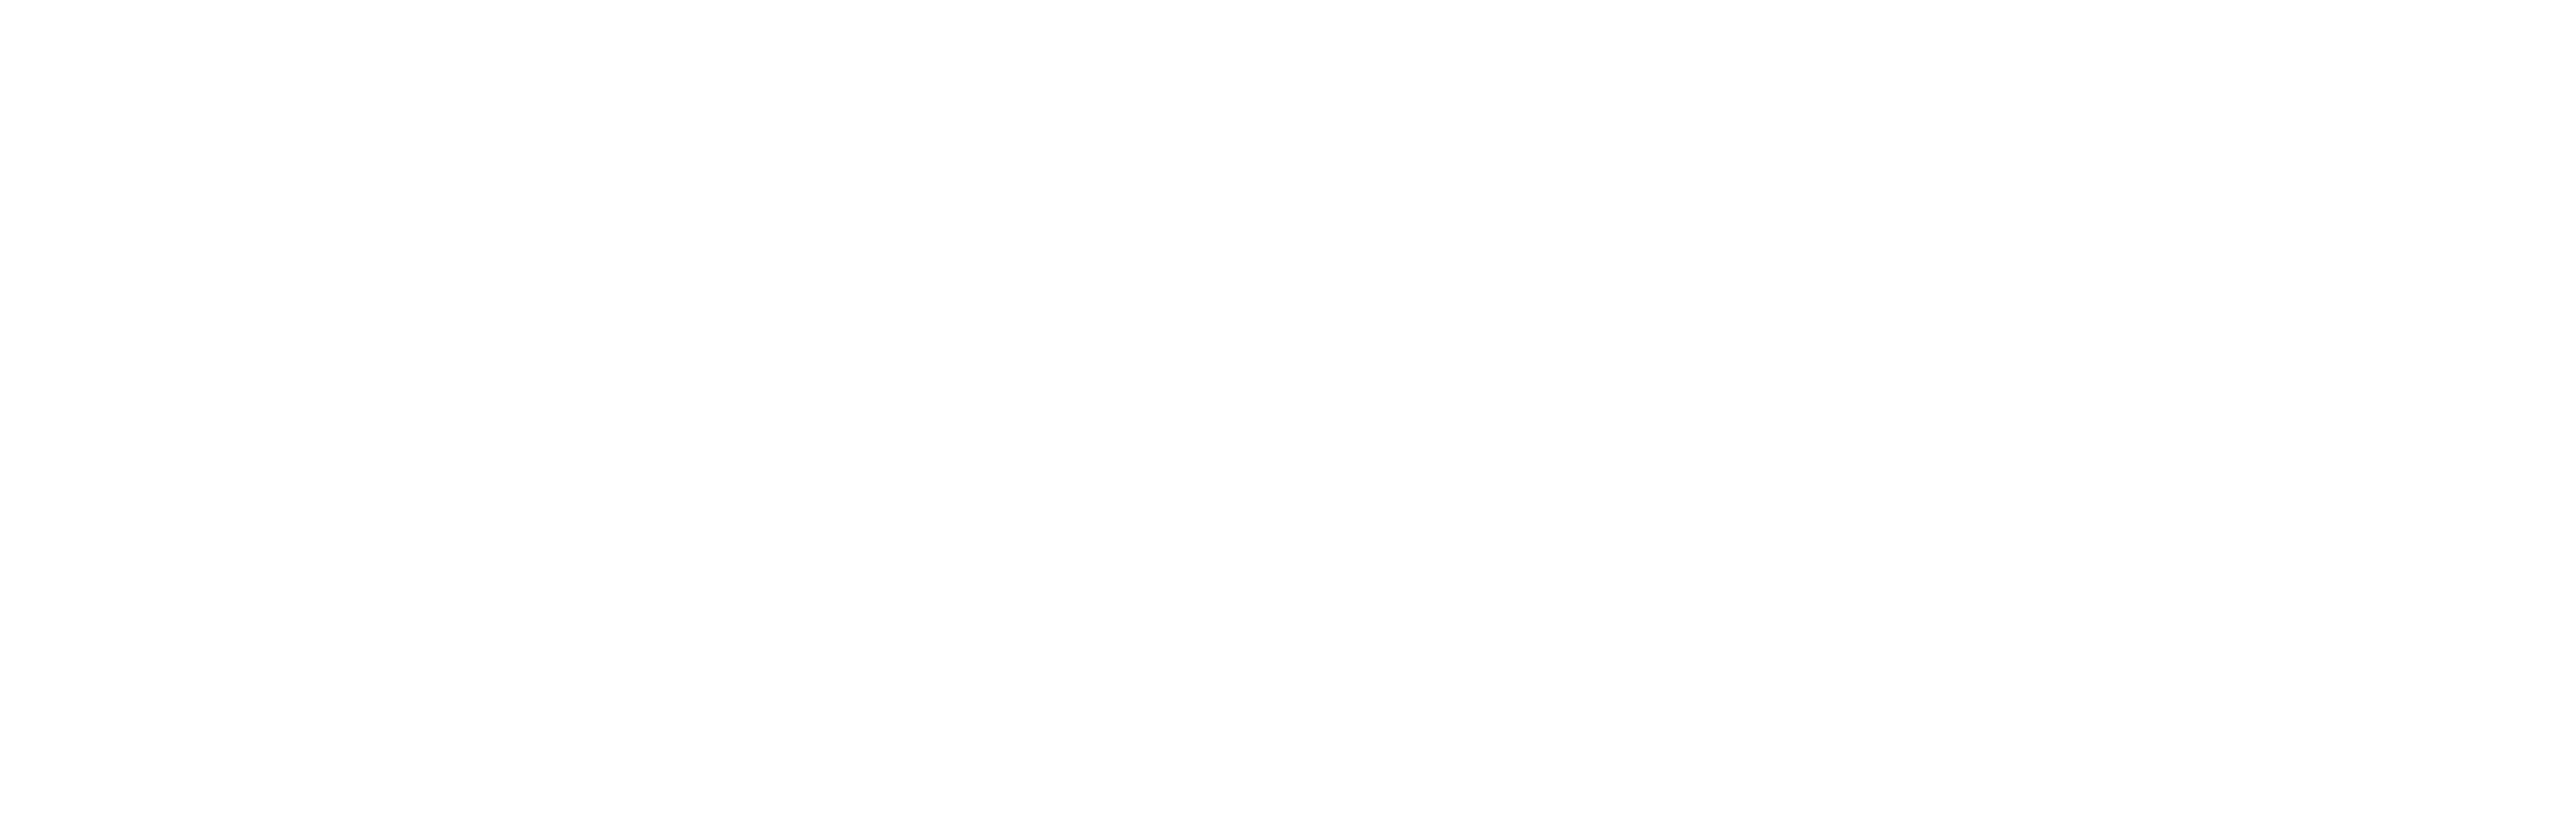 debeauteshop_logo